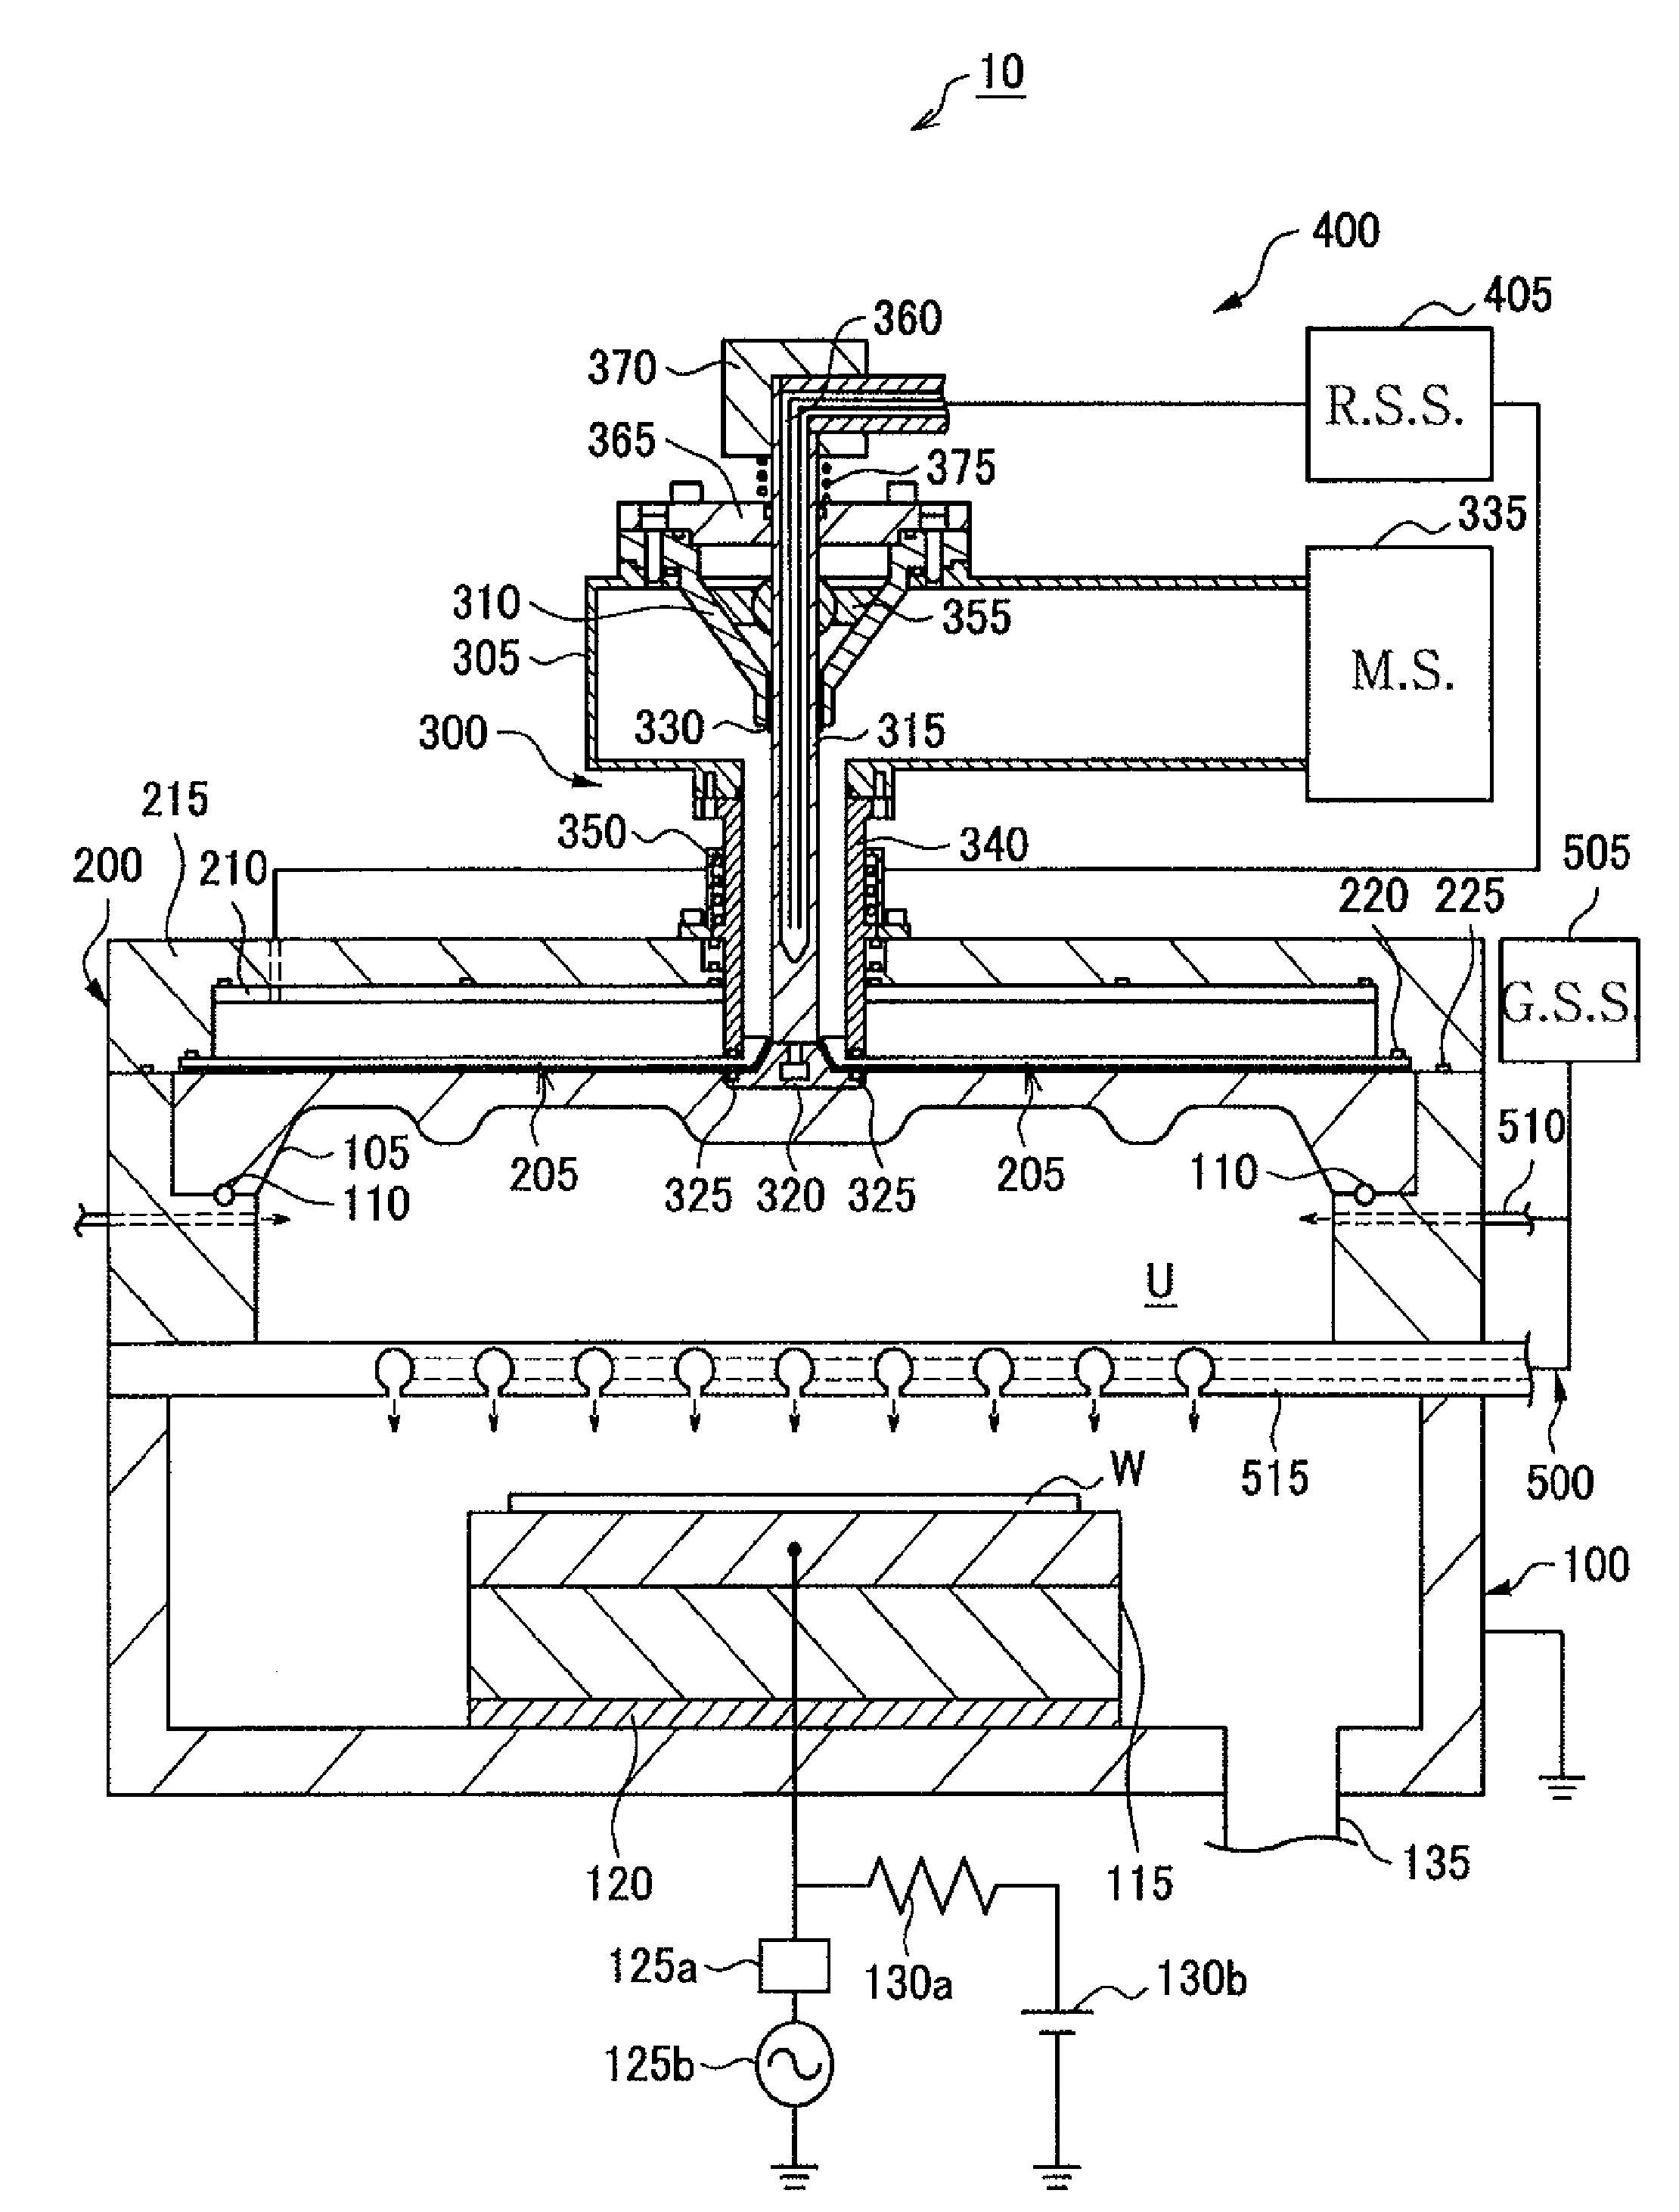 Microwave plasma processing apparatus and method of supplying microwaves using the apparatus